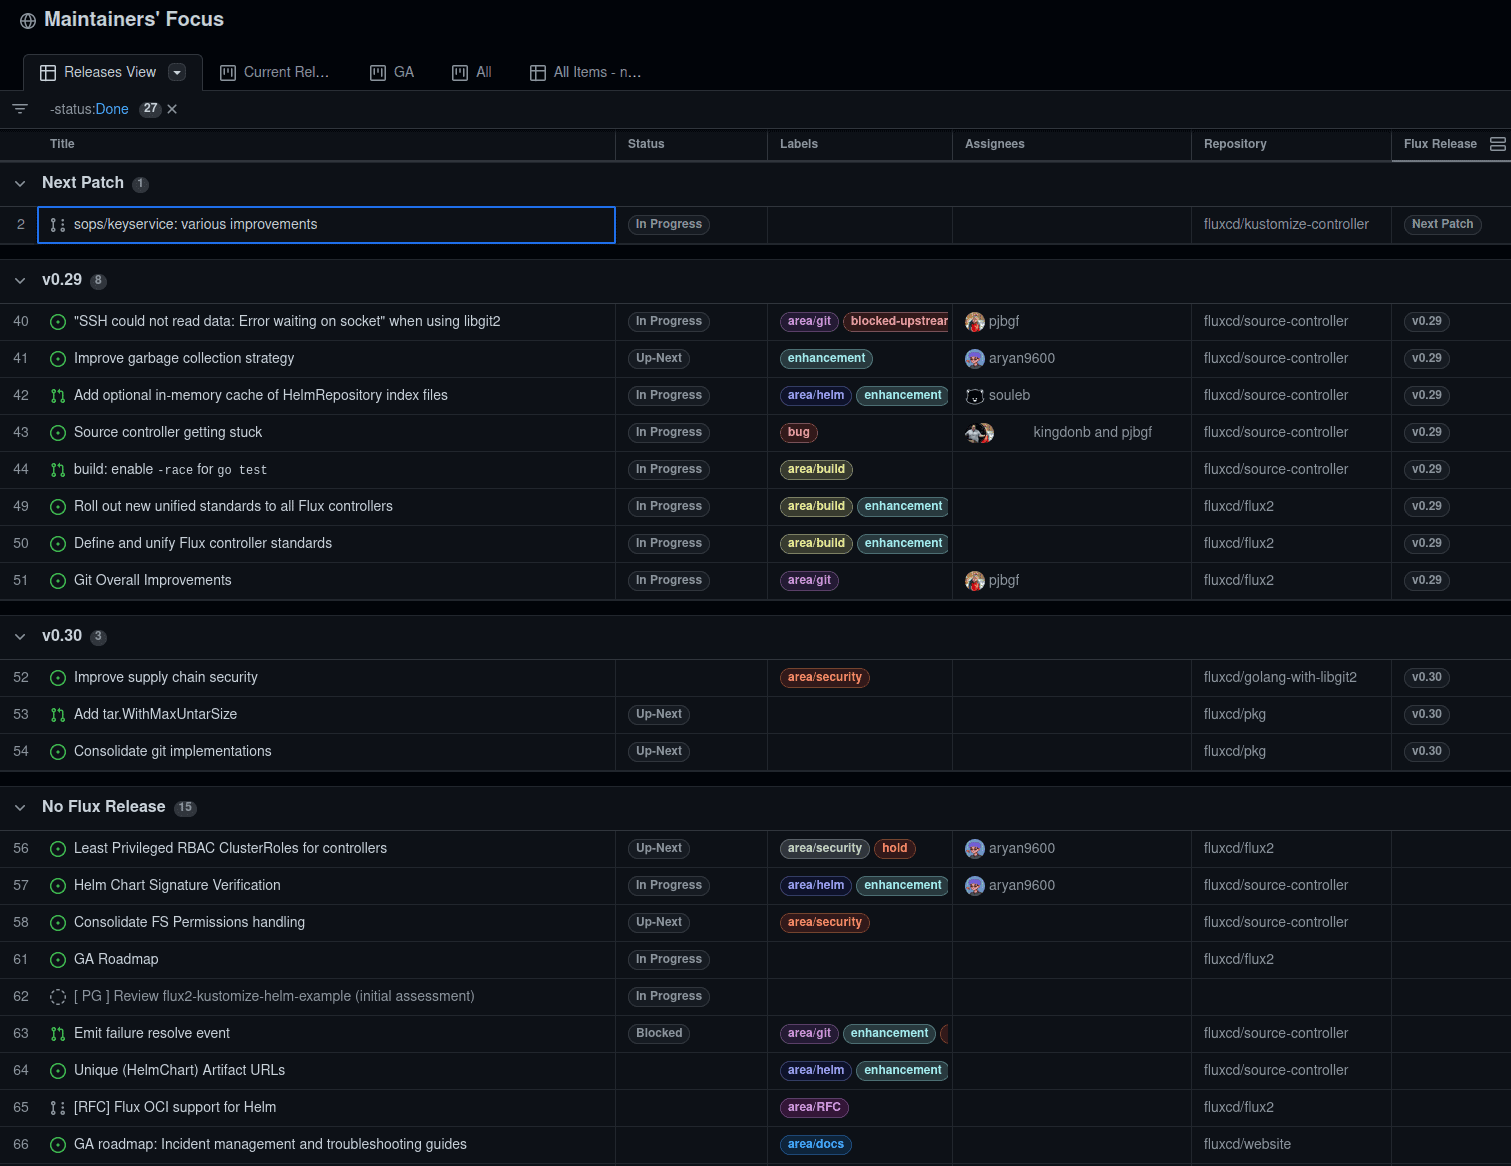 Screenshot showing Maintainer's Focus dashboard